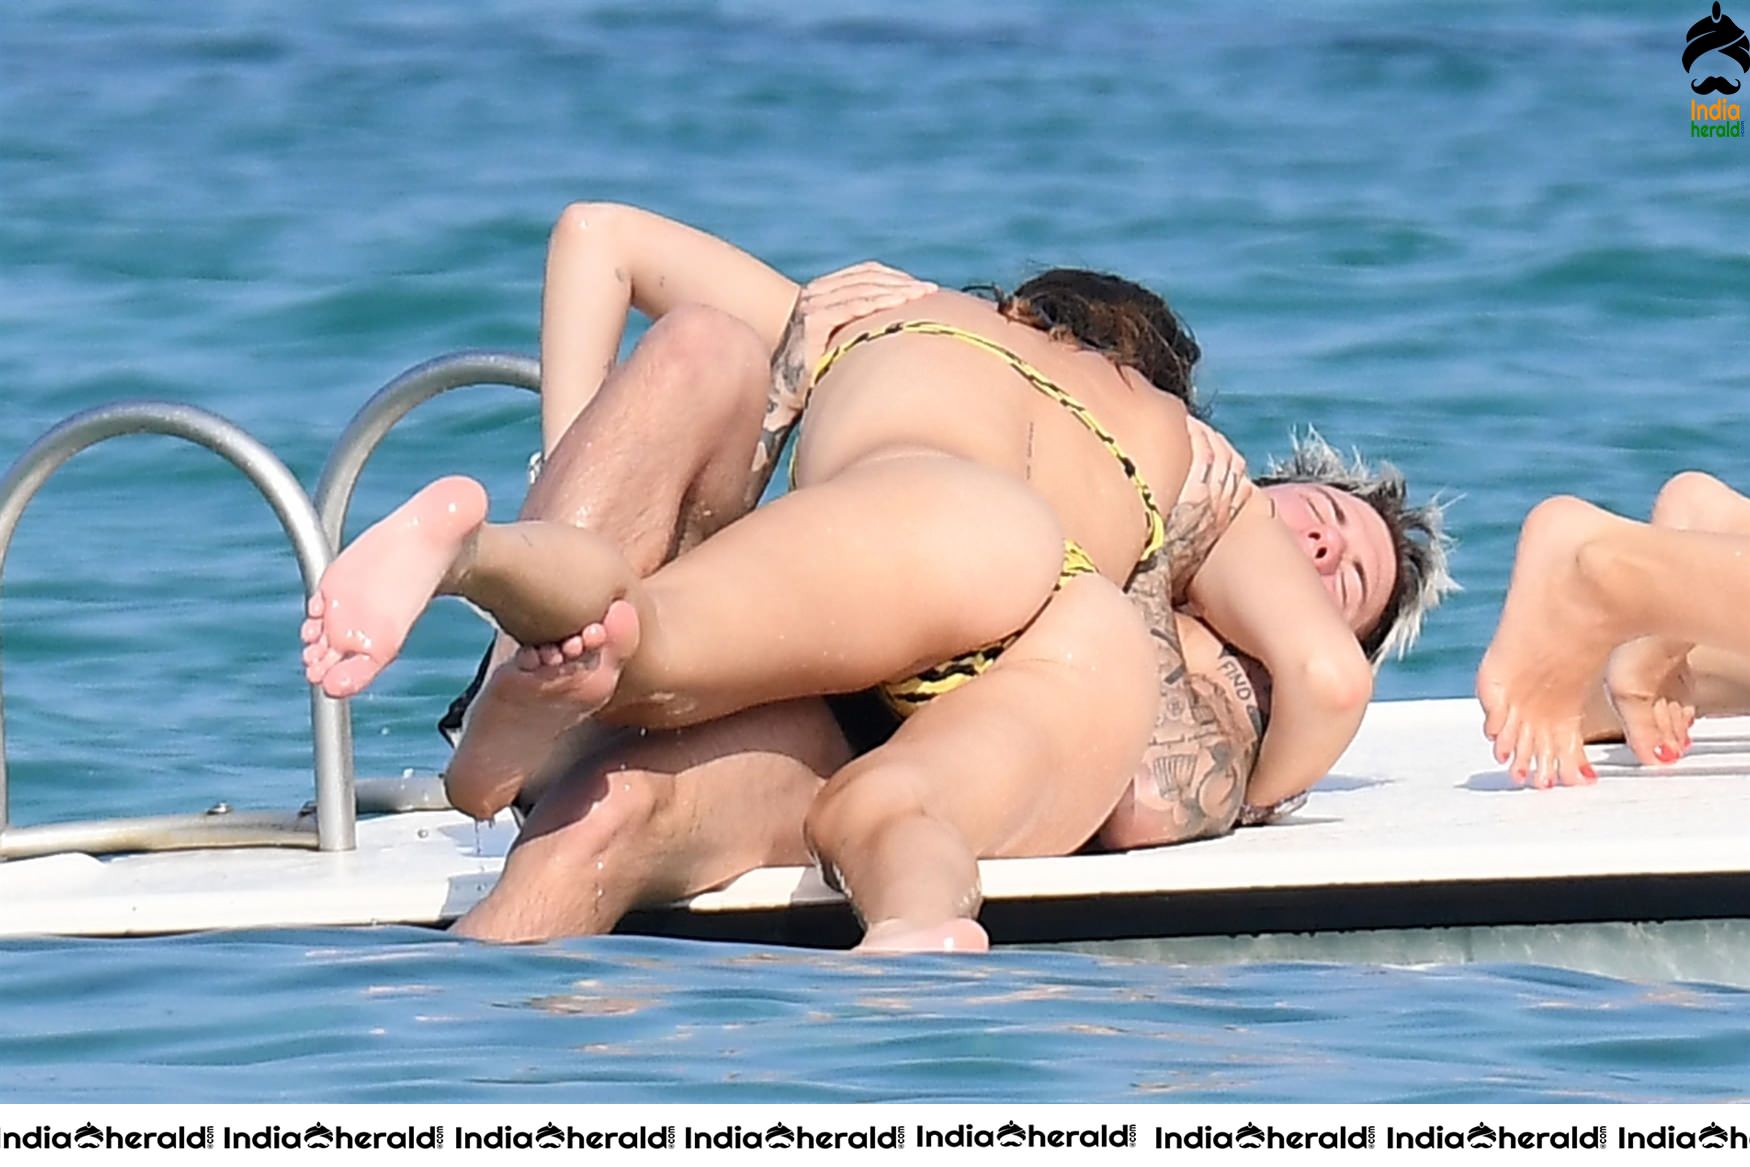 Bella Thorne in Yellow Striped Bikini and Enjoys with her Boyfriend in a Beach in Maywood